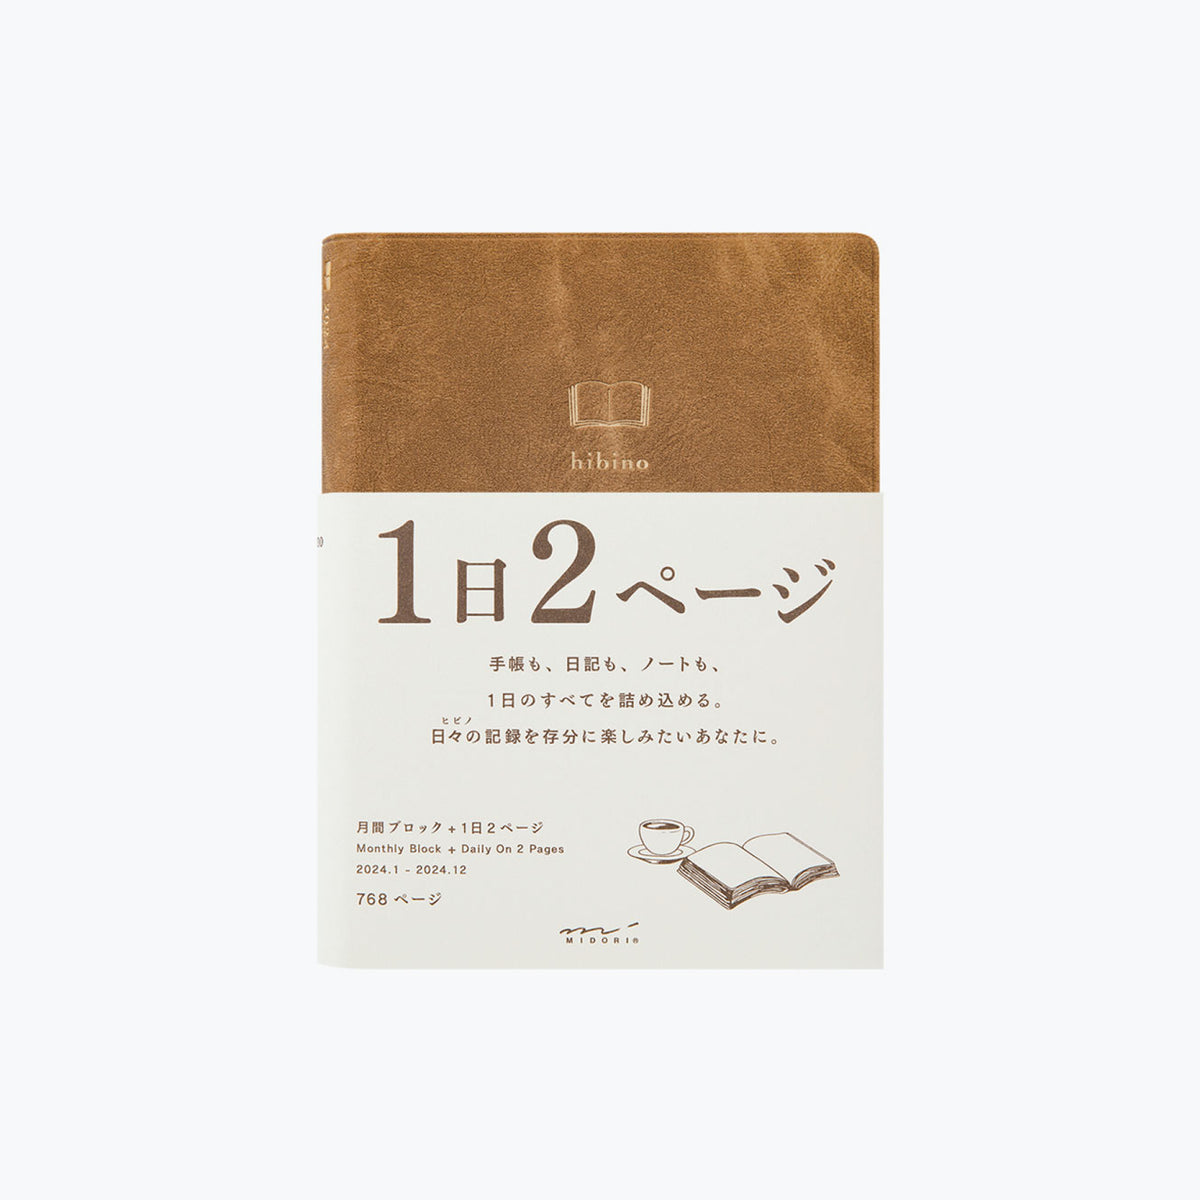 Midori - 2025 Diary - Hibino - A6 - Camel